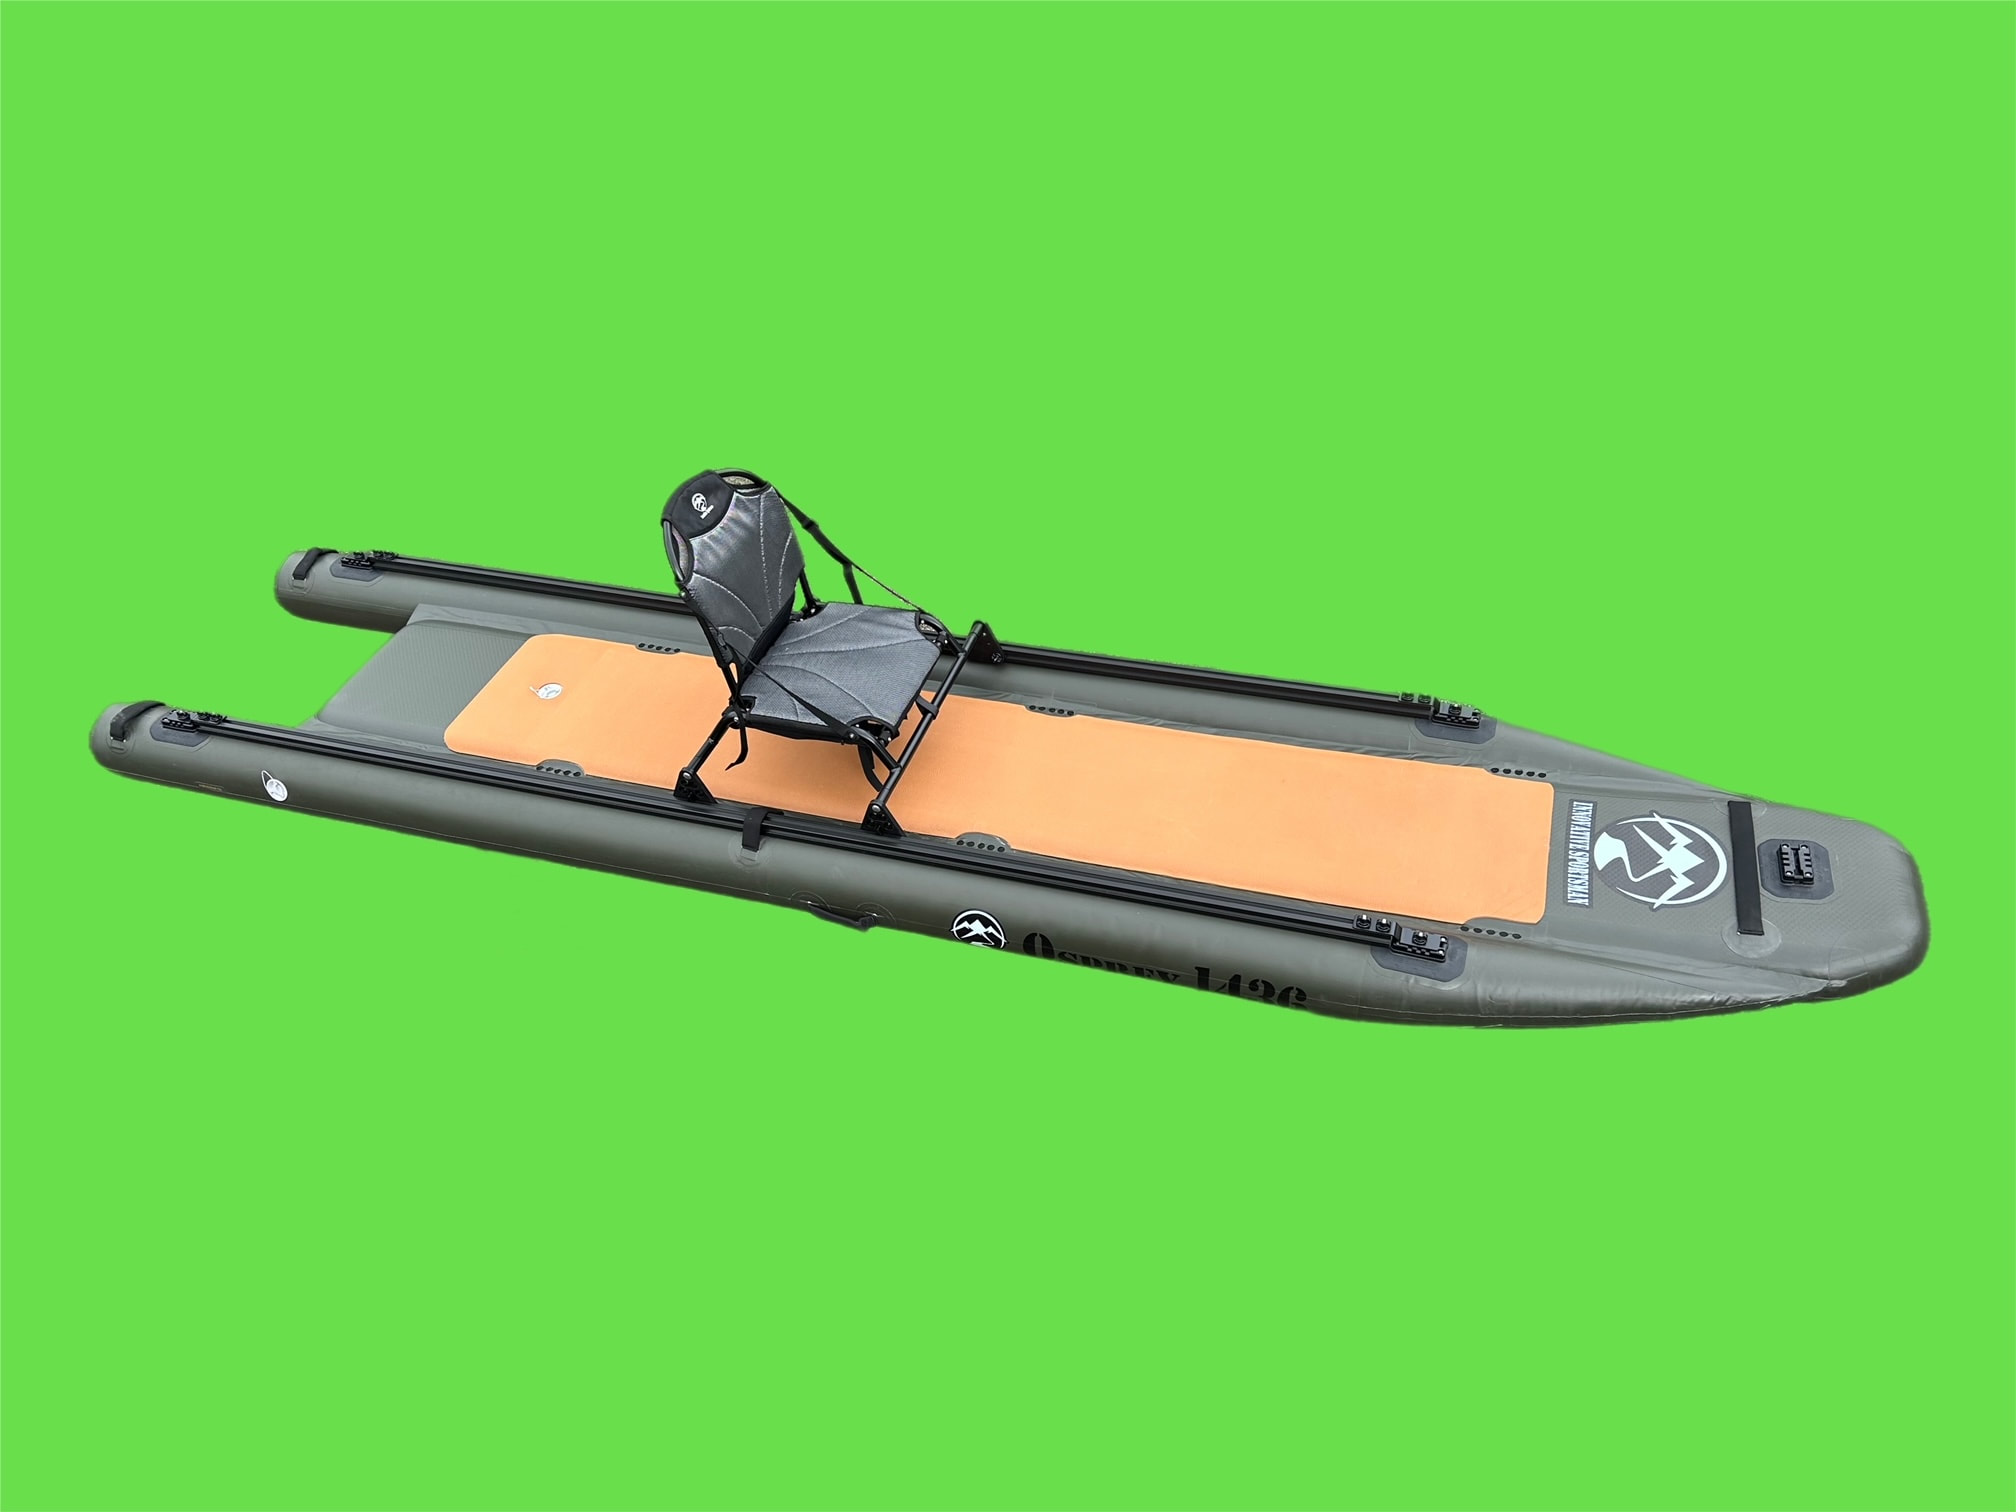 Osprey 1436 Inflatable Kayak